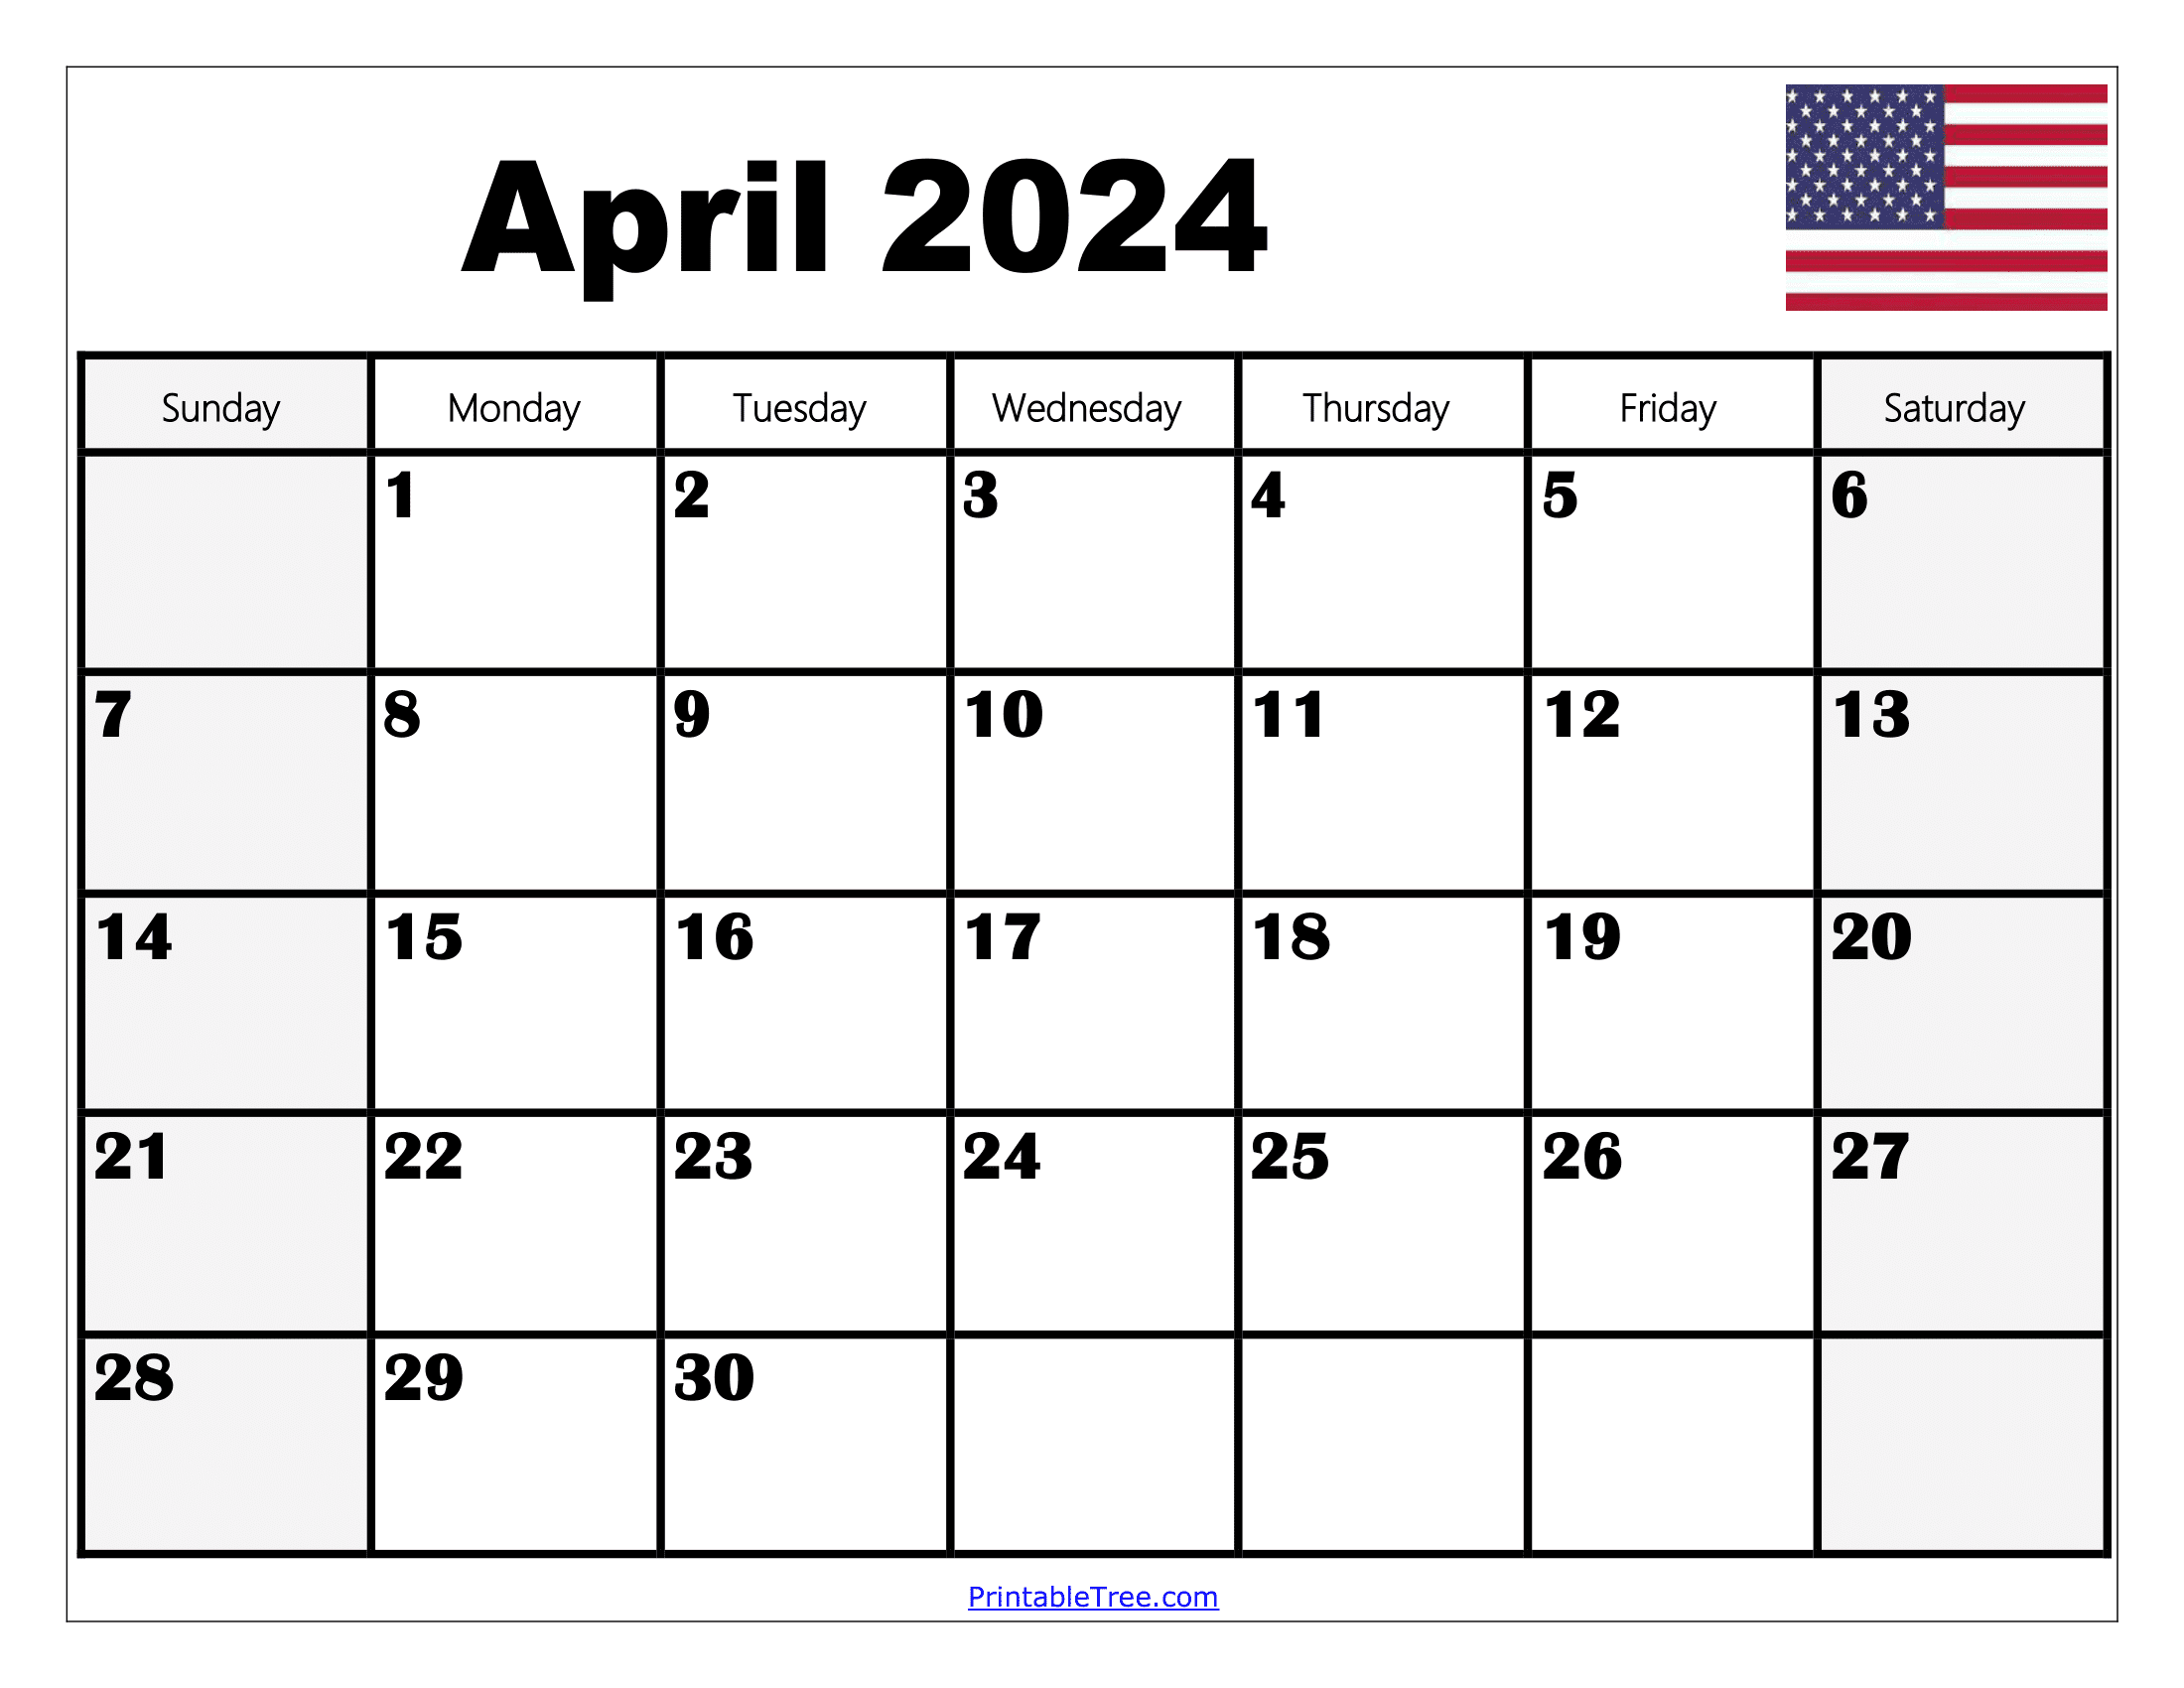 Blank April 2024 Calendar Printable Pdf Template With Holidays for April 2024 Calendar With Holidays Printable